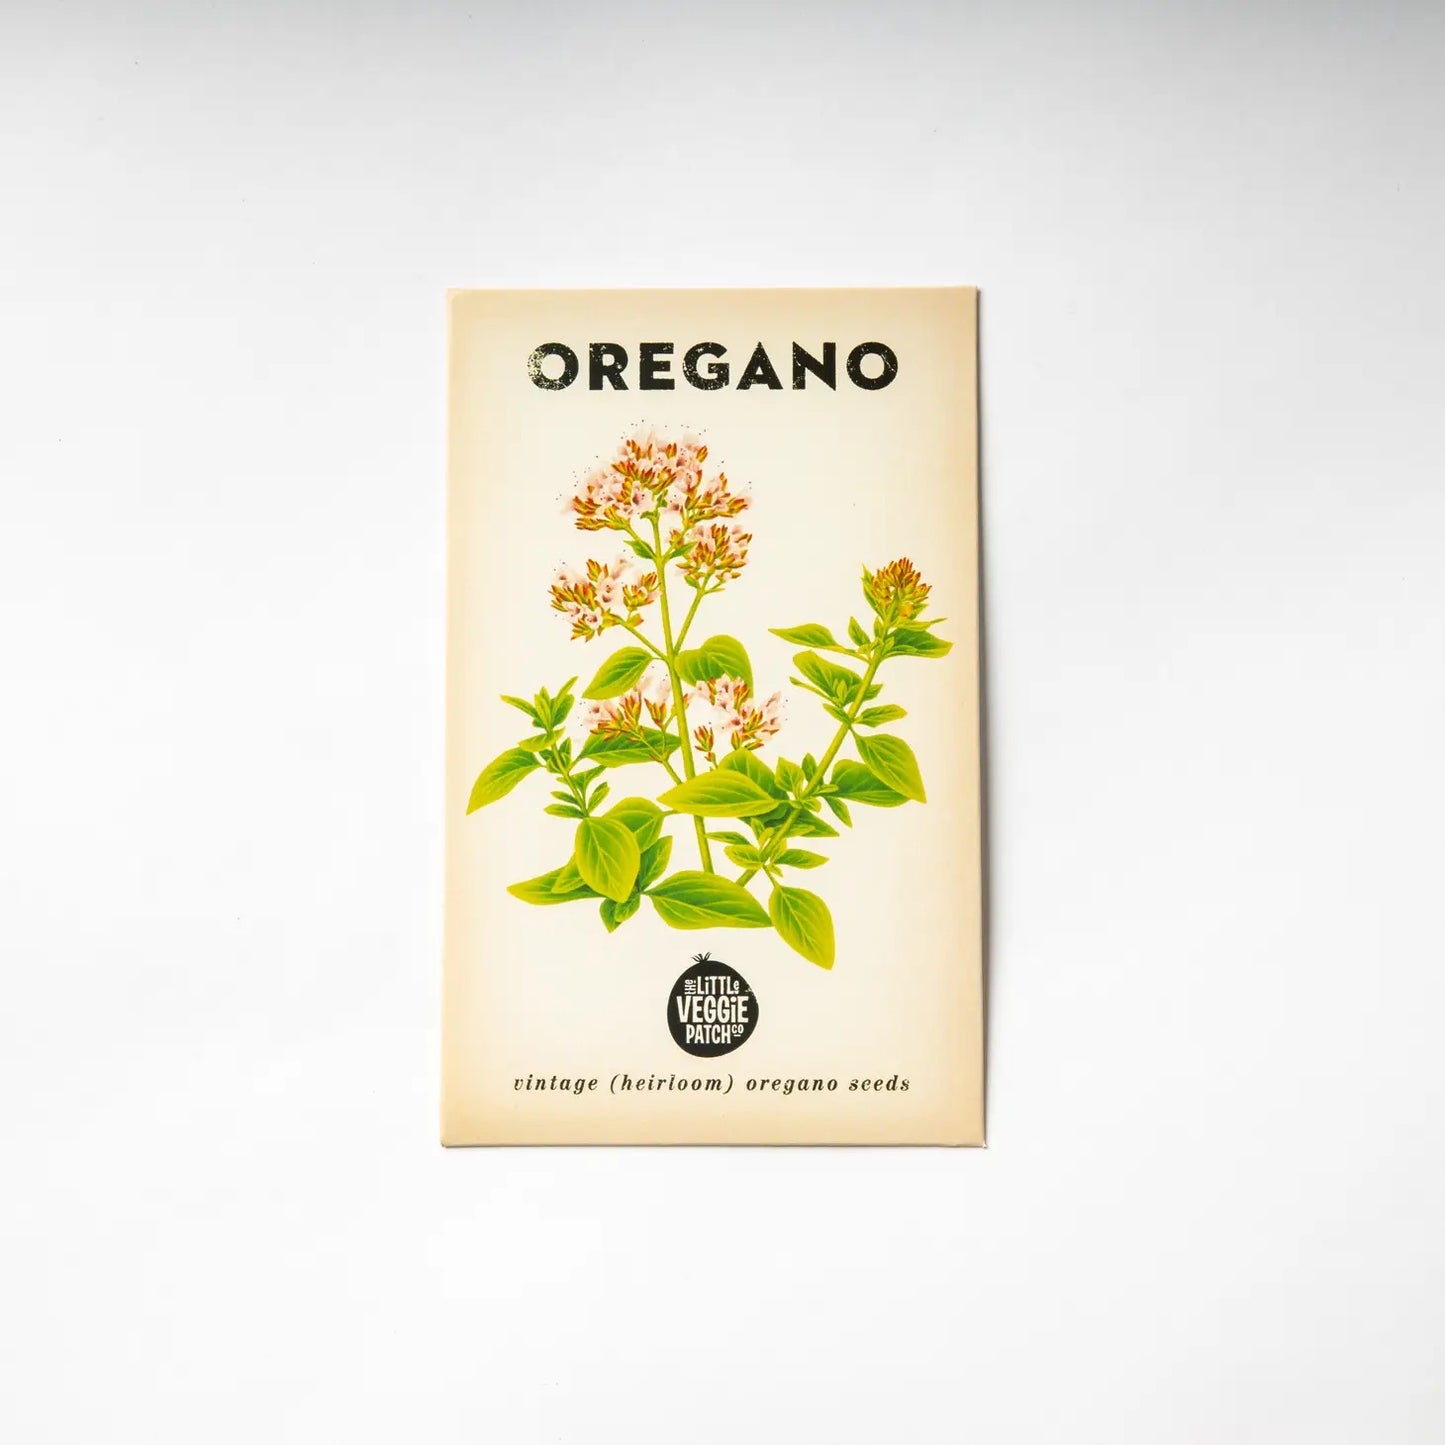 Oregano "Common" Heirloom Seeds